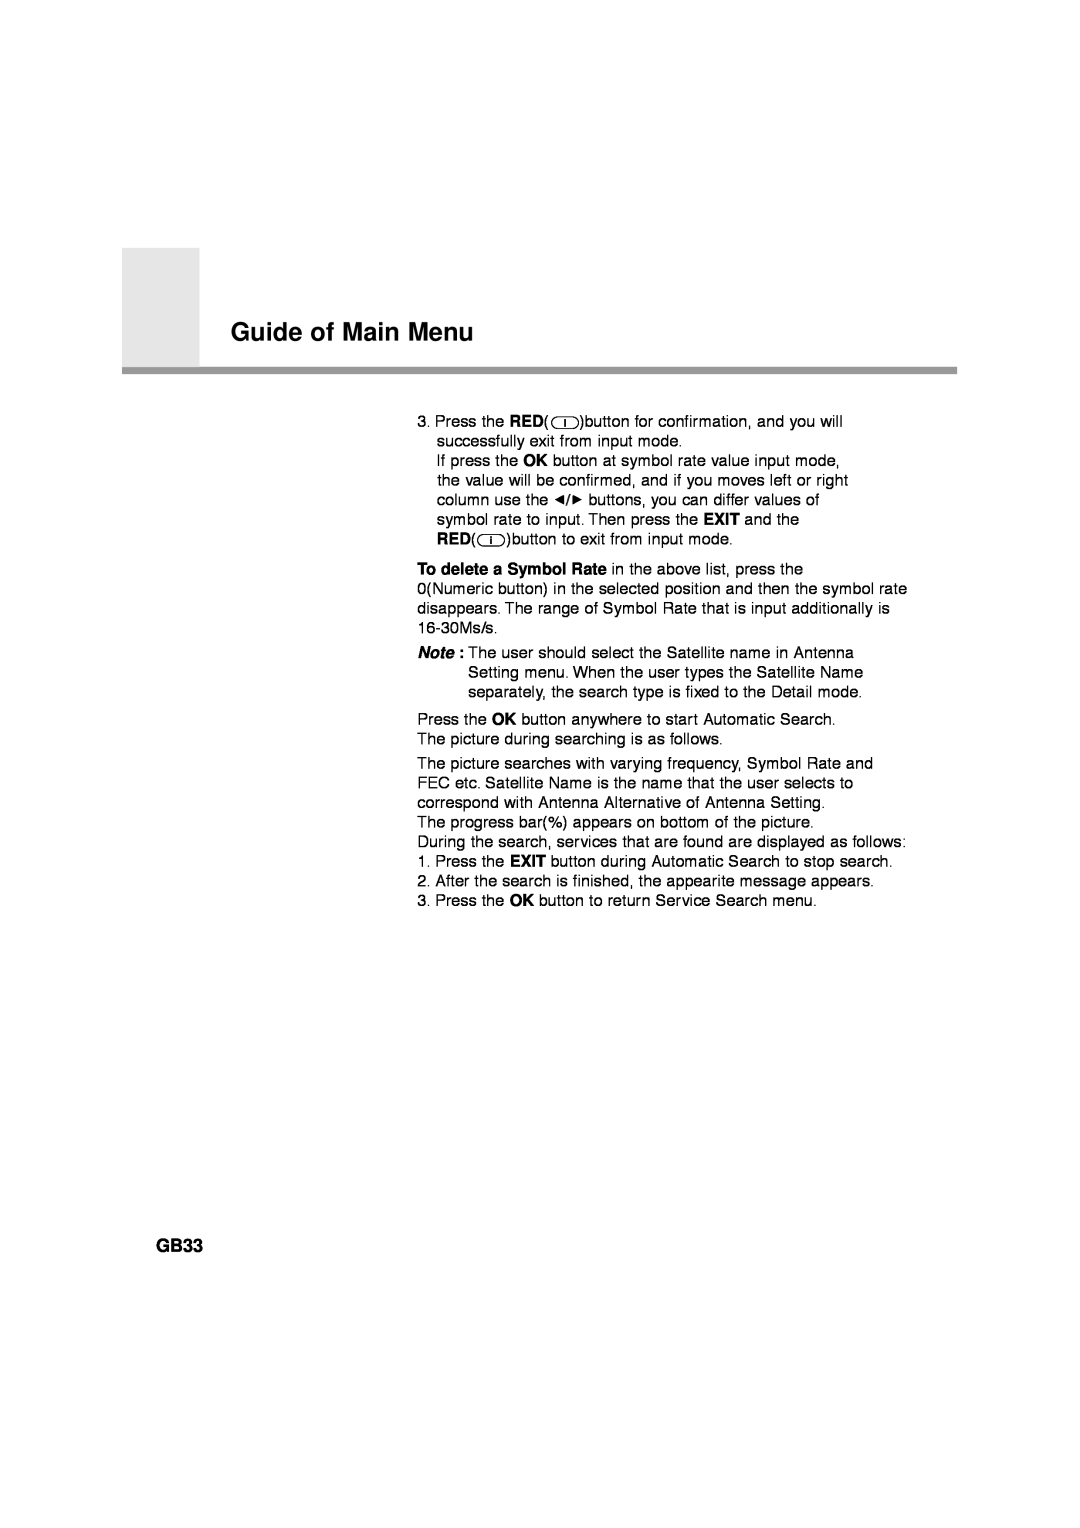 Humax VA-FOX, F1-FOX, NA-FOX, CA-FOX manual GB33, Guide of Main Menu 